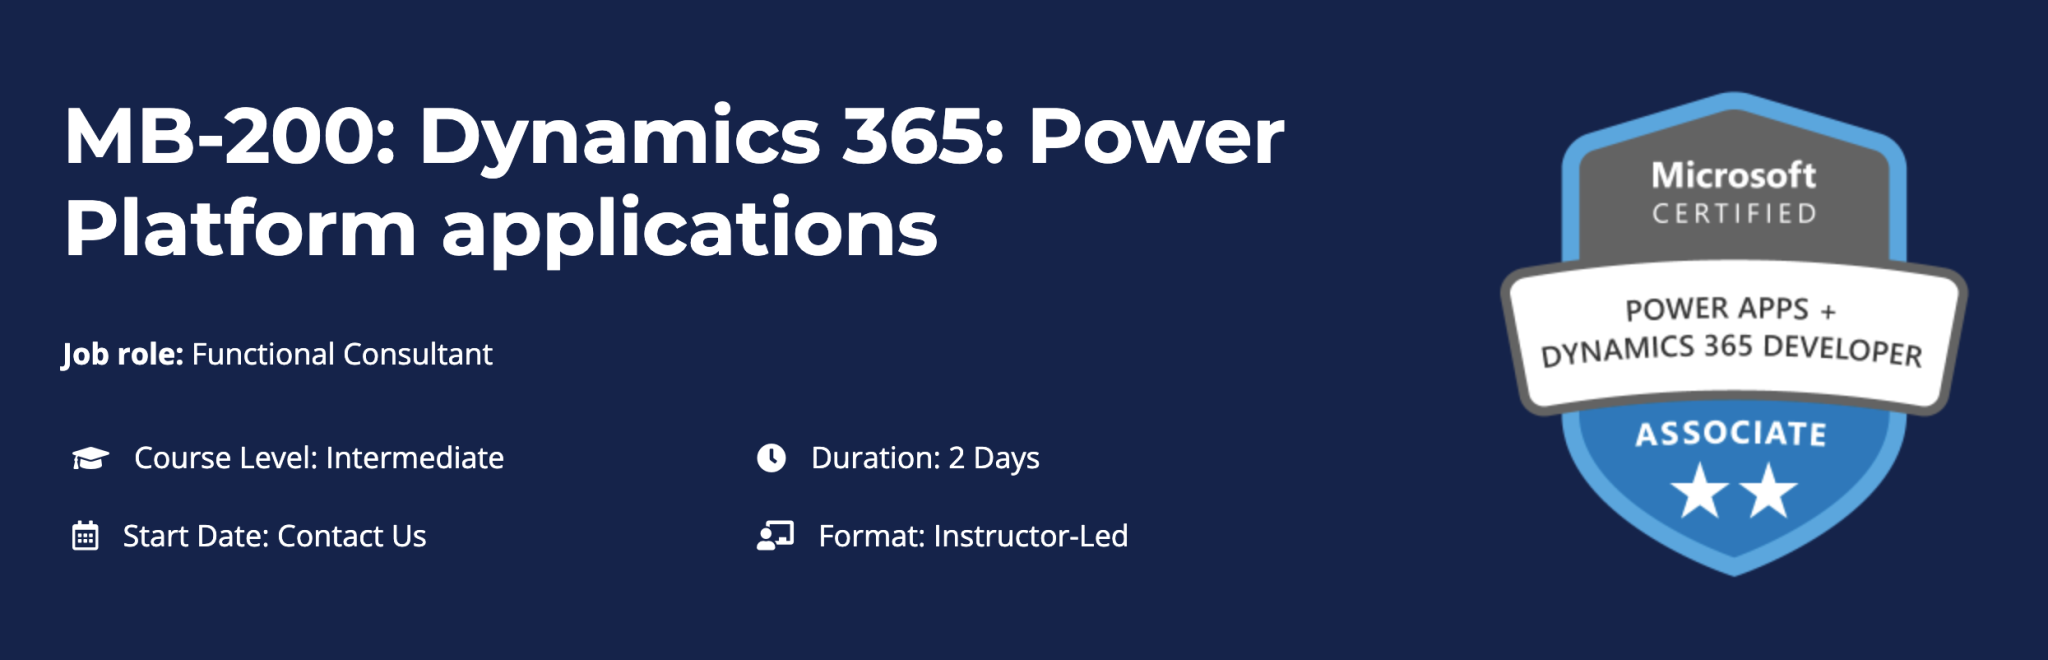 MB-200: Dynamics 365: Power Platform applications